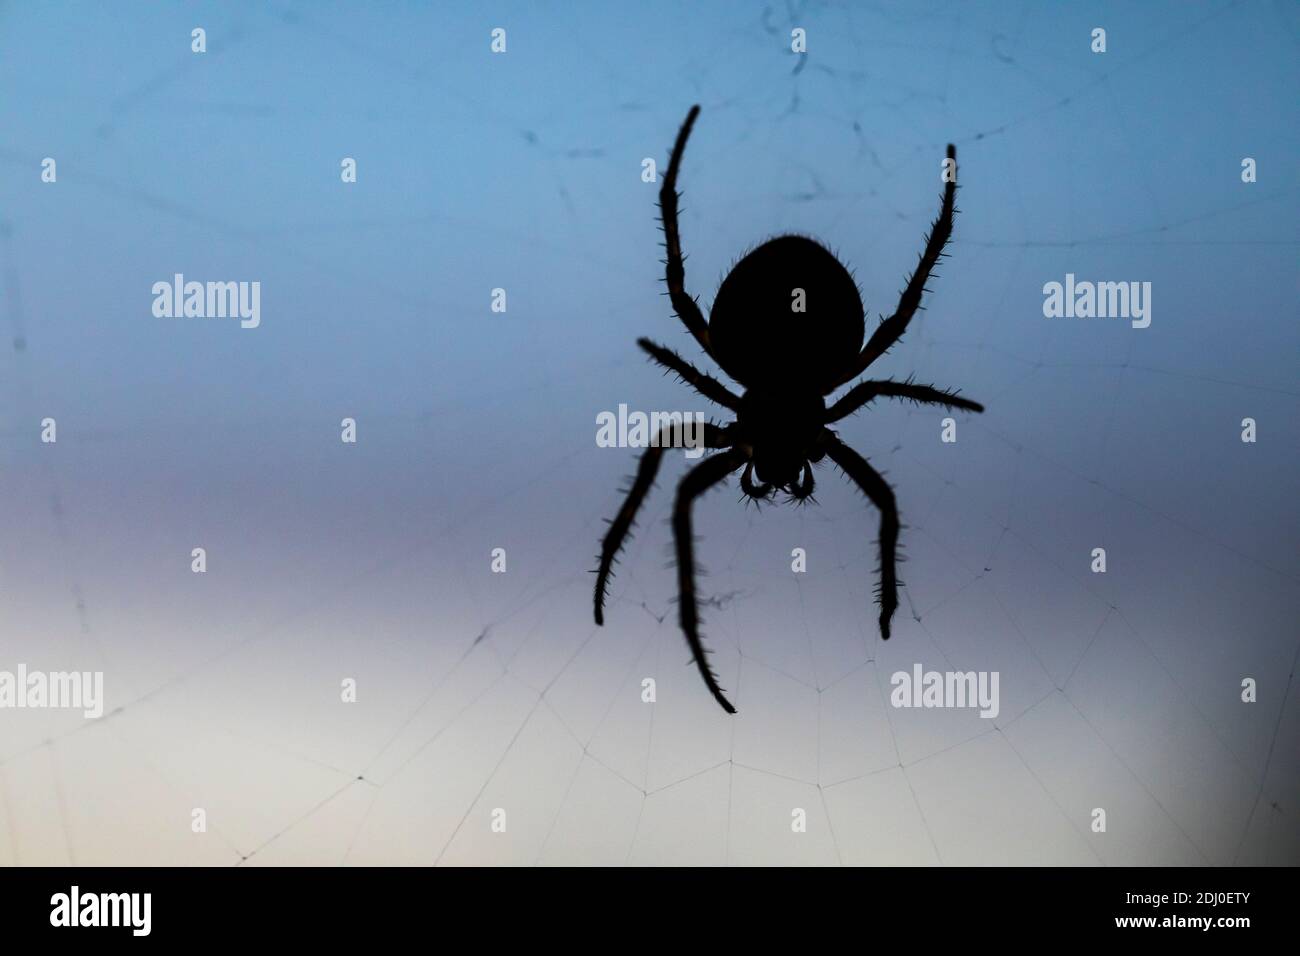 A spider on a web against a blue sky, Western Washington State, USA. Stock Photo